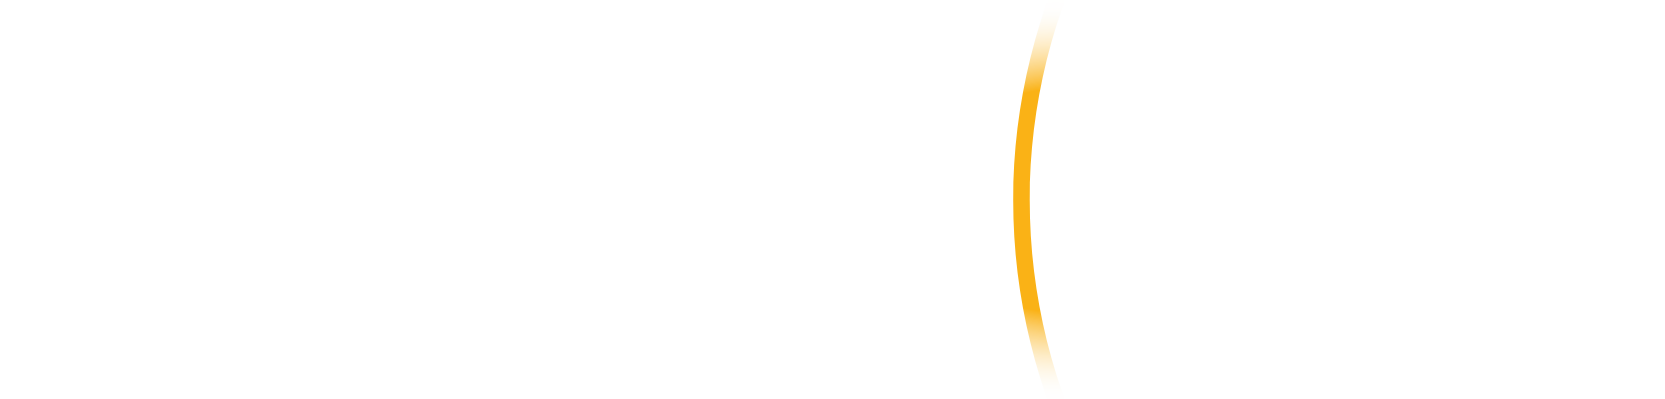 BlackSky Technology Logo groß für dunkle Hintergründe (transparentes PNG)